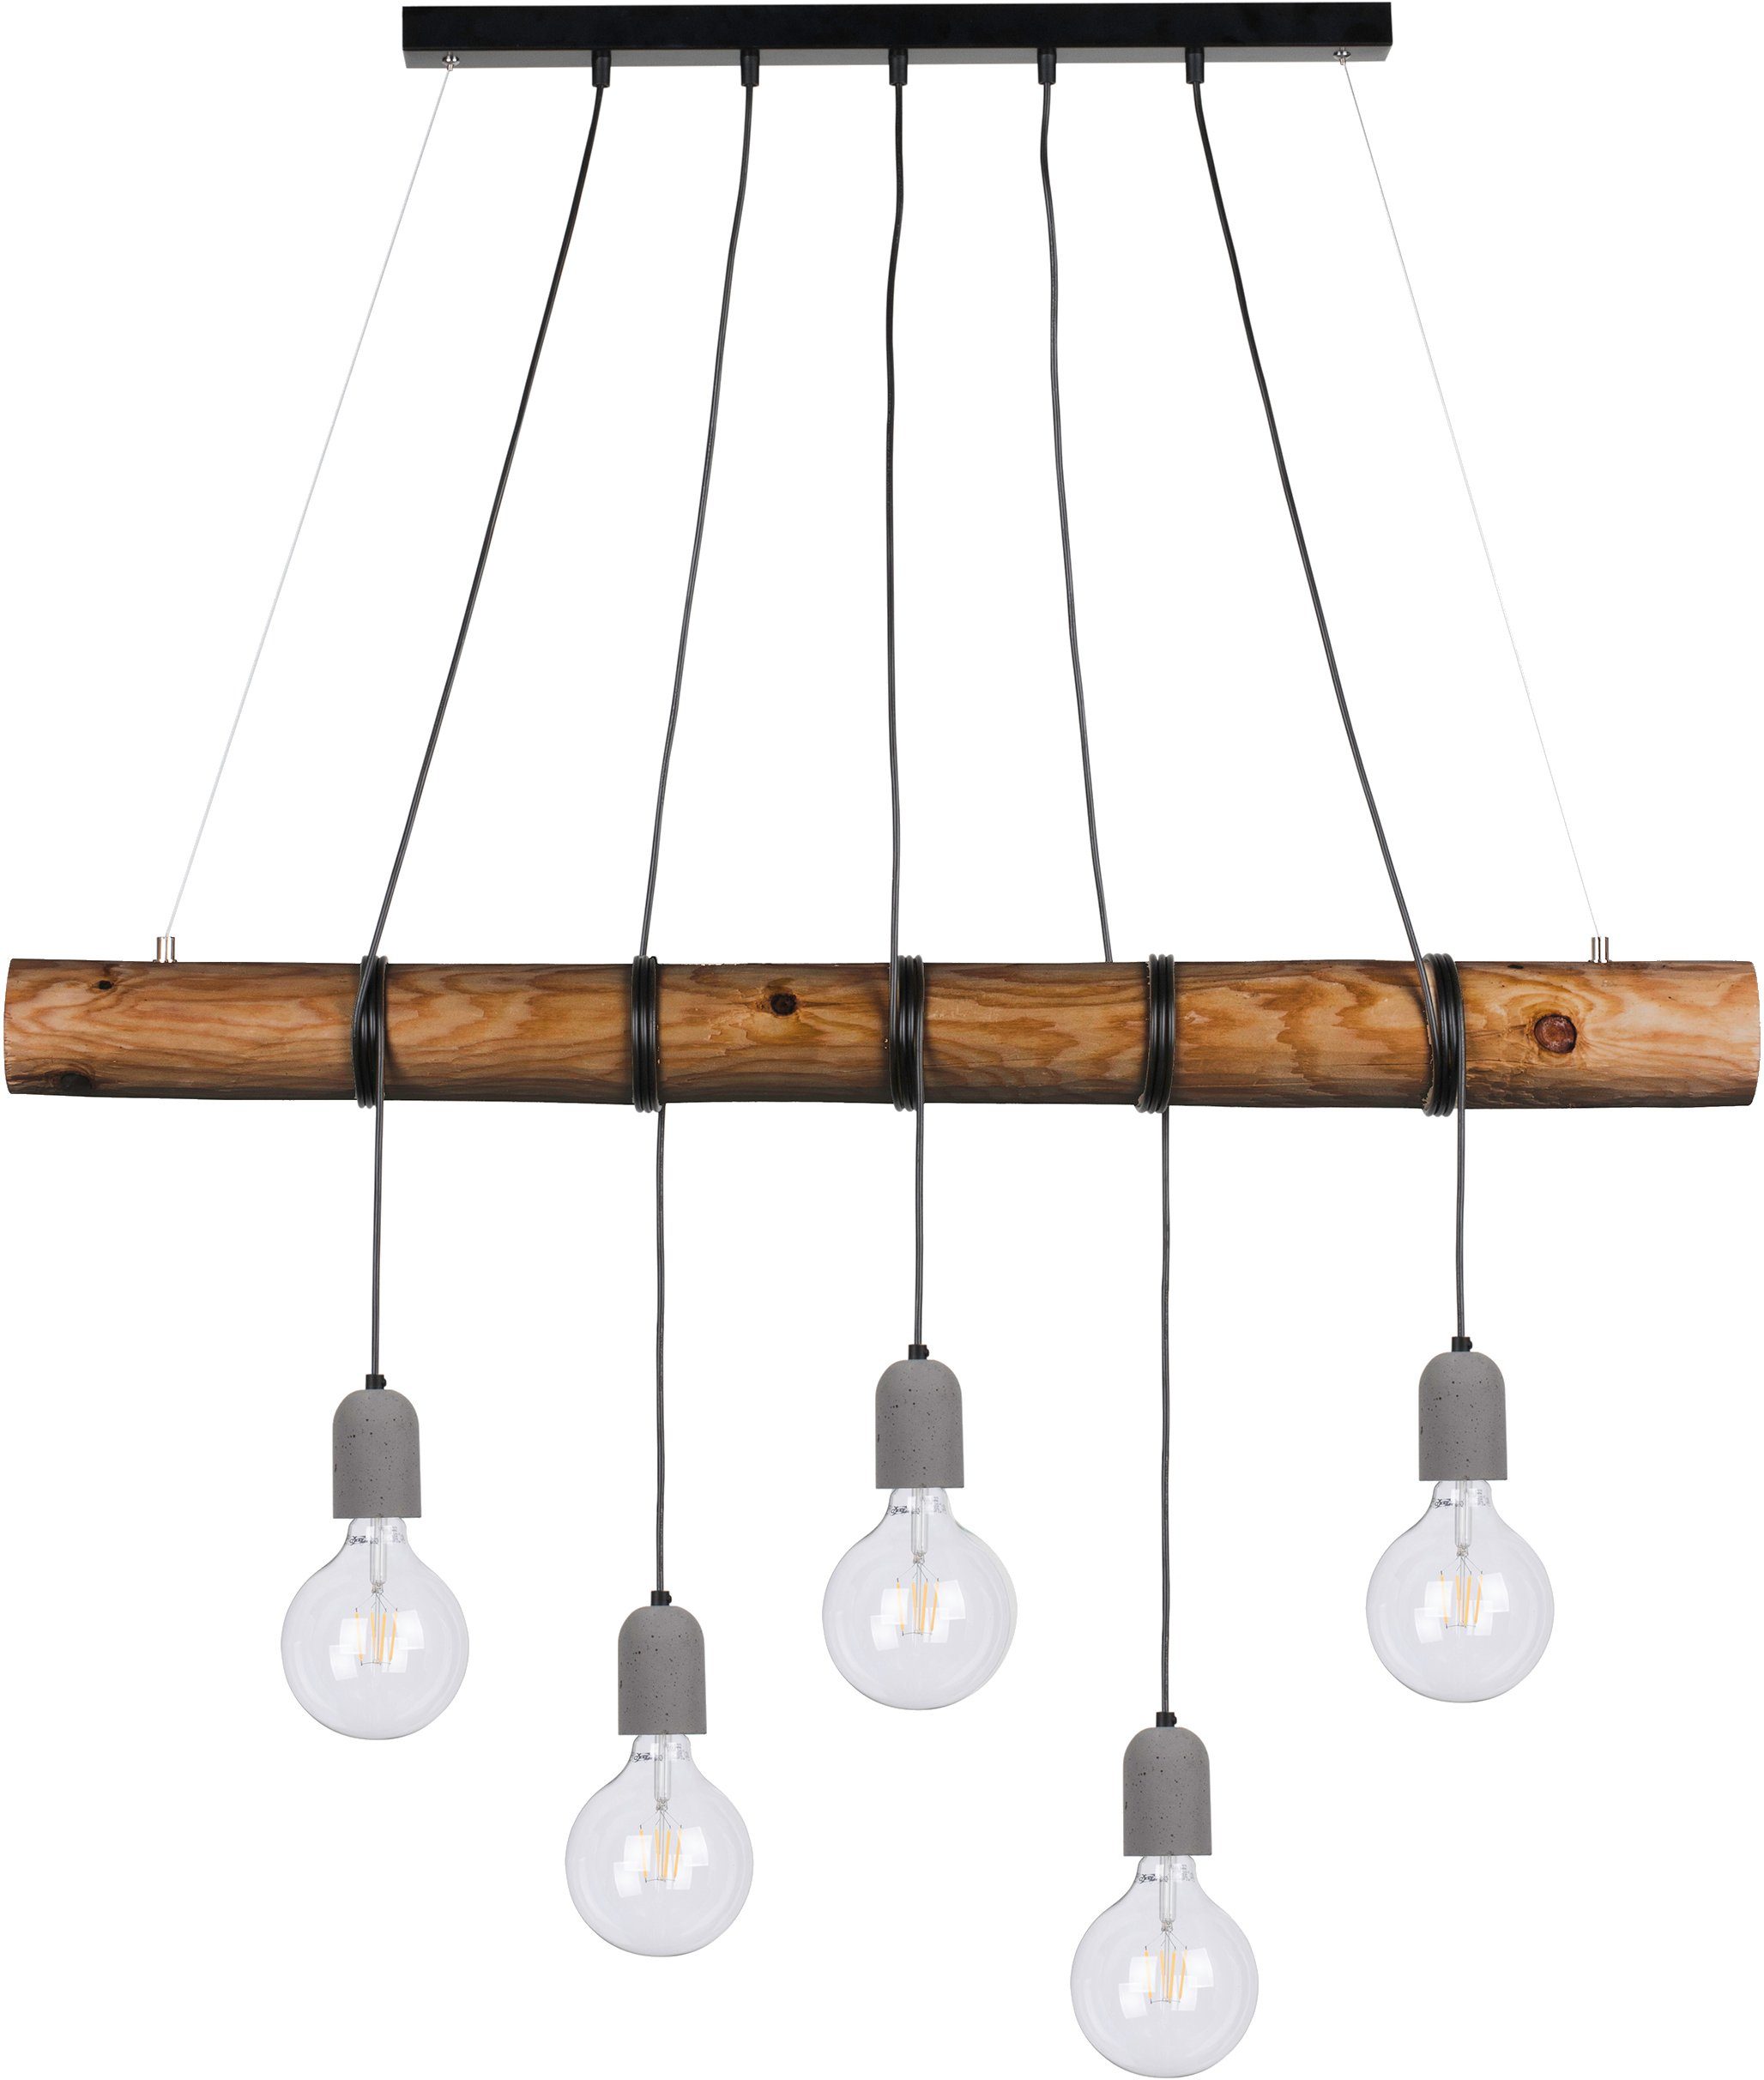 spot light hanglamp trabo concrete hanglamp, houten balk van grenenhout oe 8-12 cm, echt beton grijs